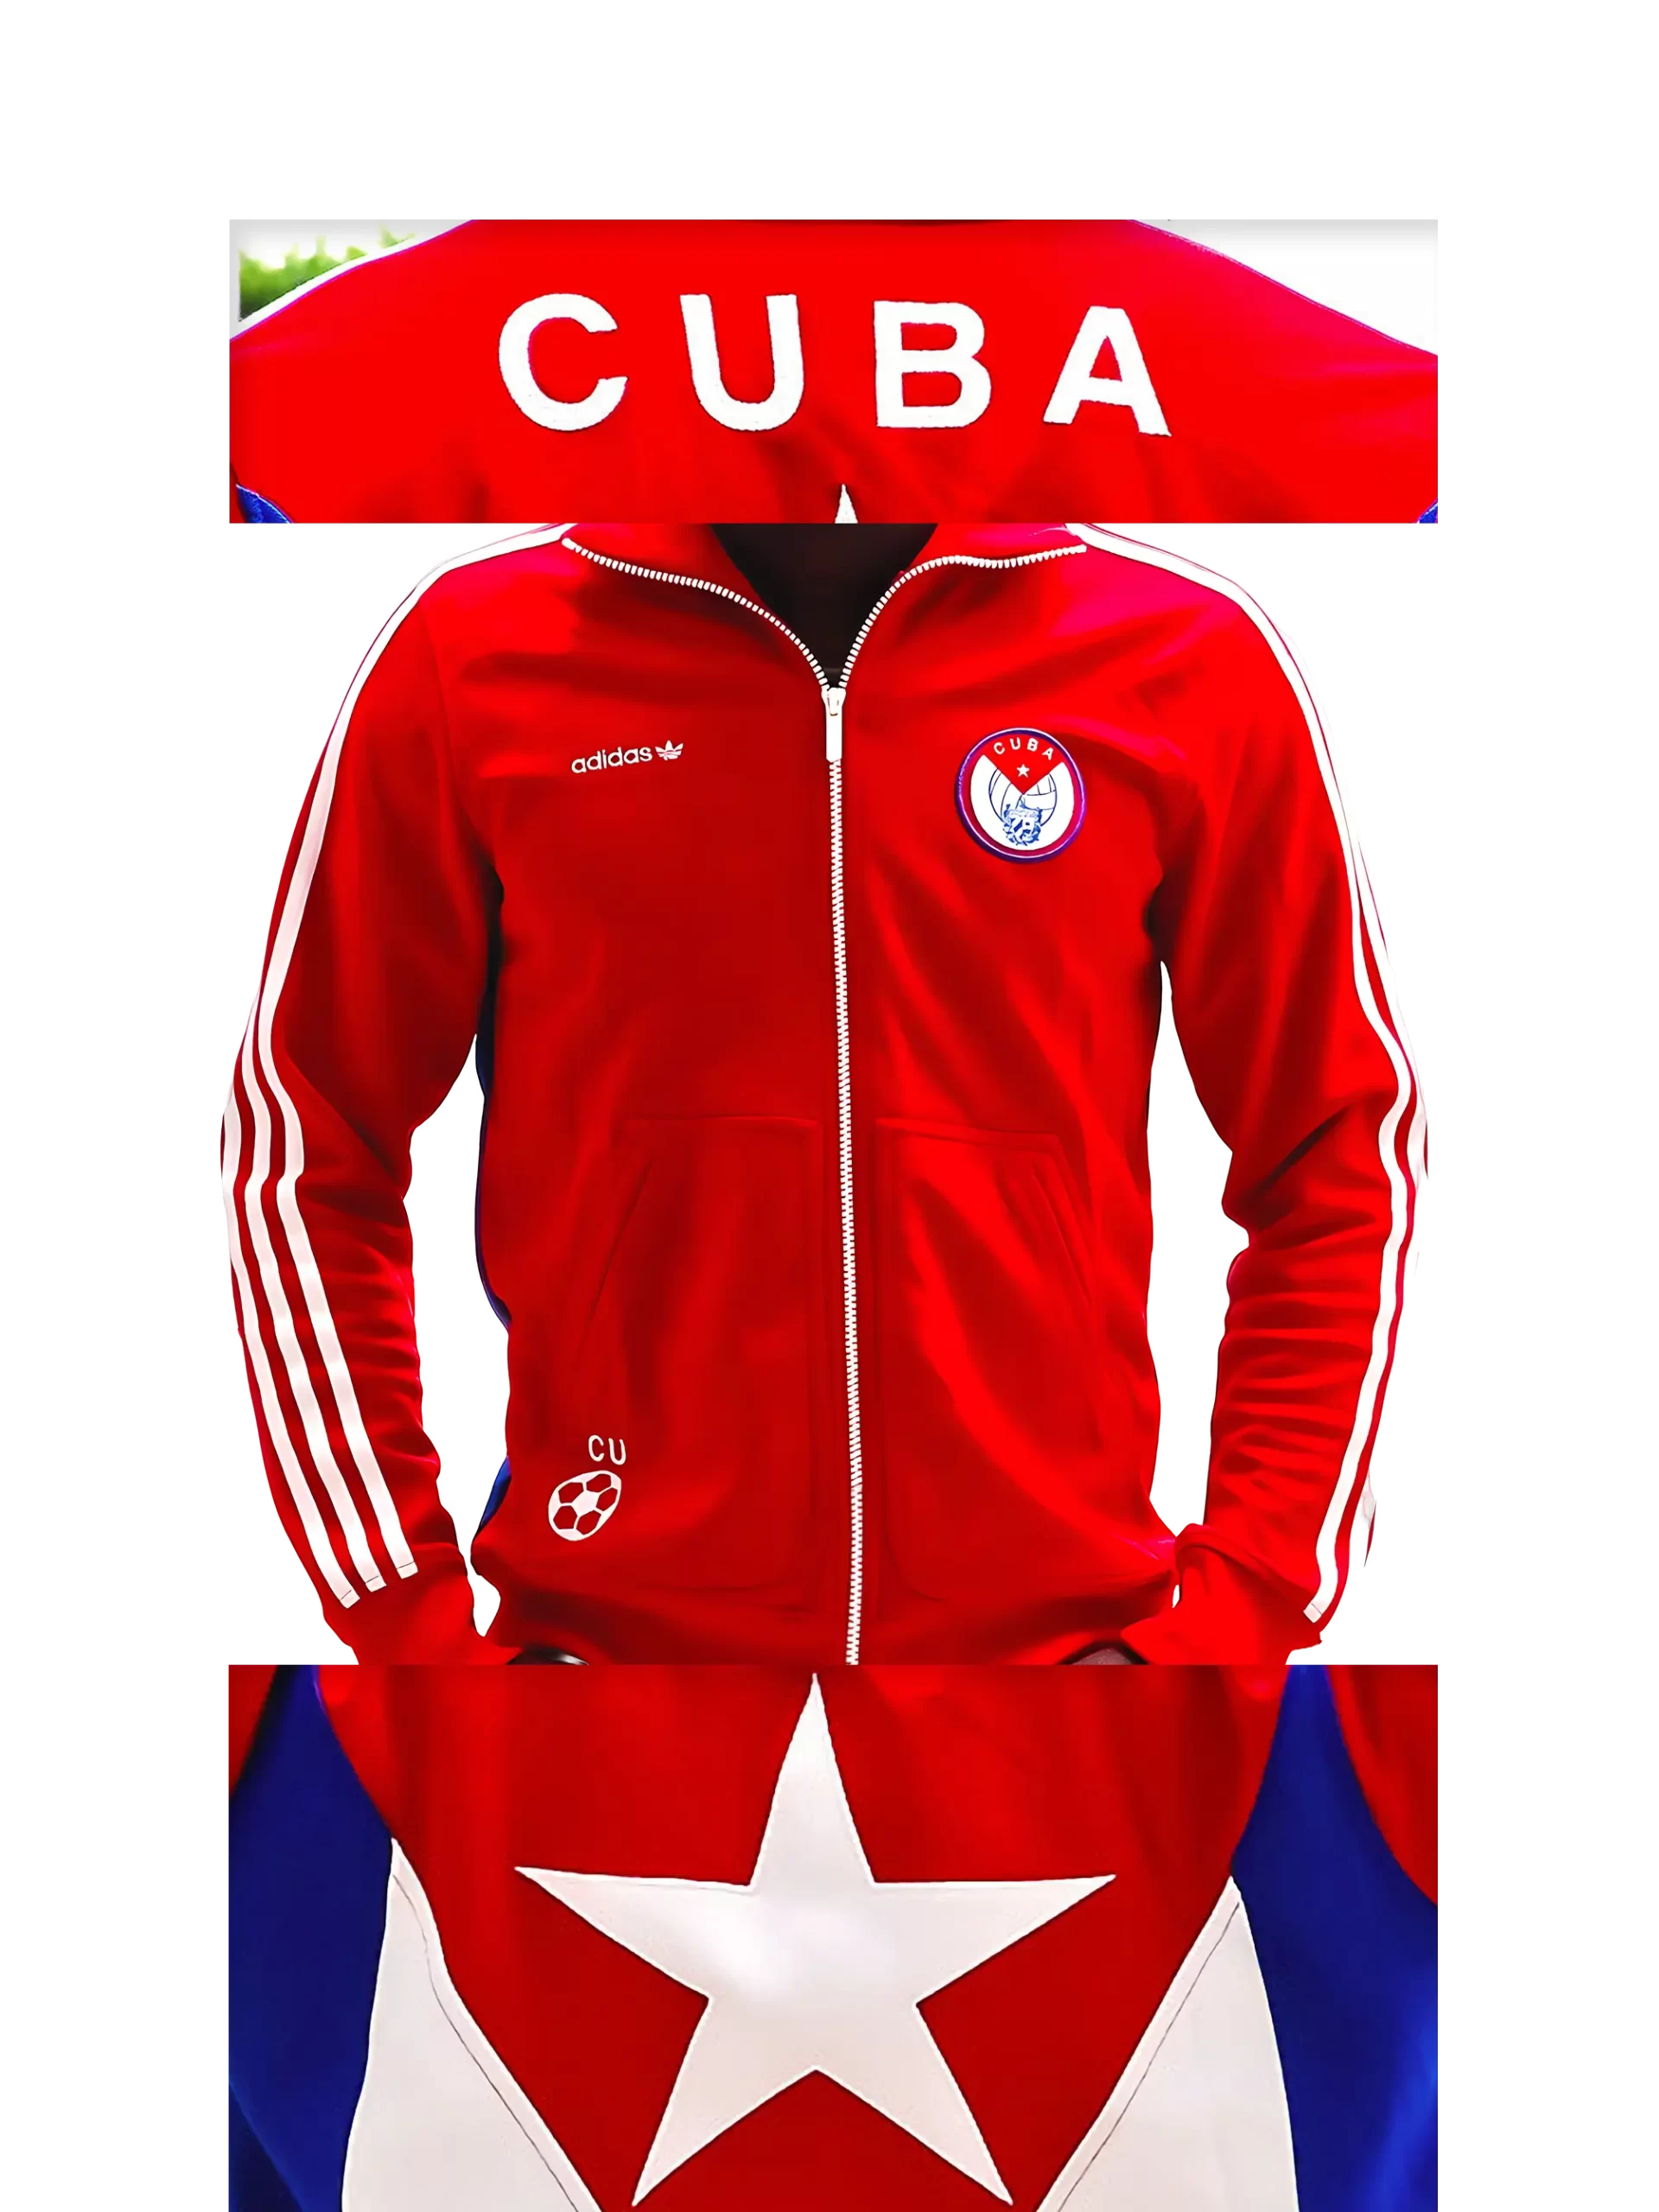 Men’s 2007 Cuba Track Top by Adidas Originals: Sublime (EnLawded.com file #lmchk40265ip2y121438kg9st)